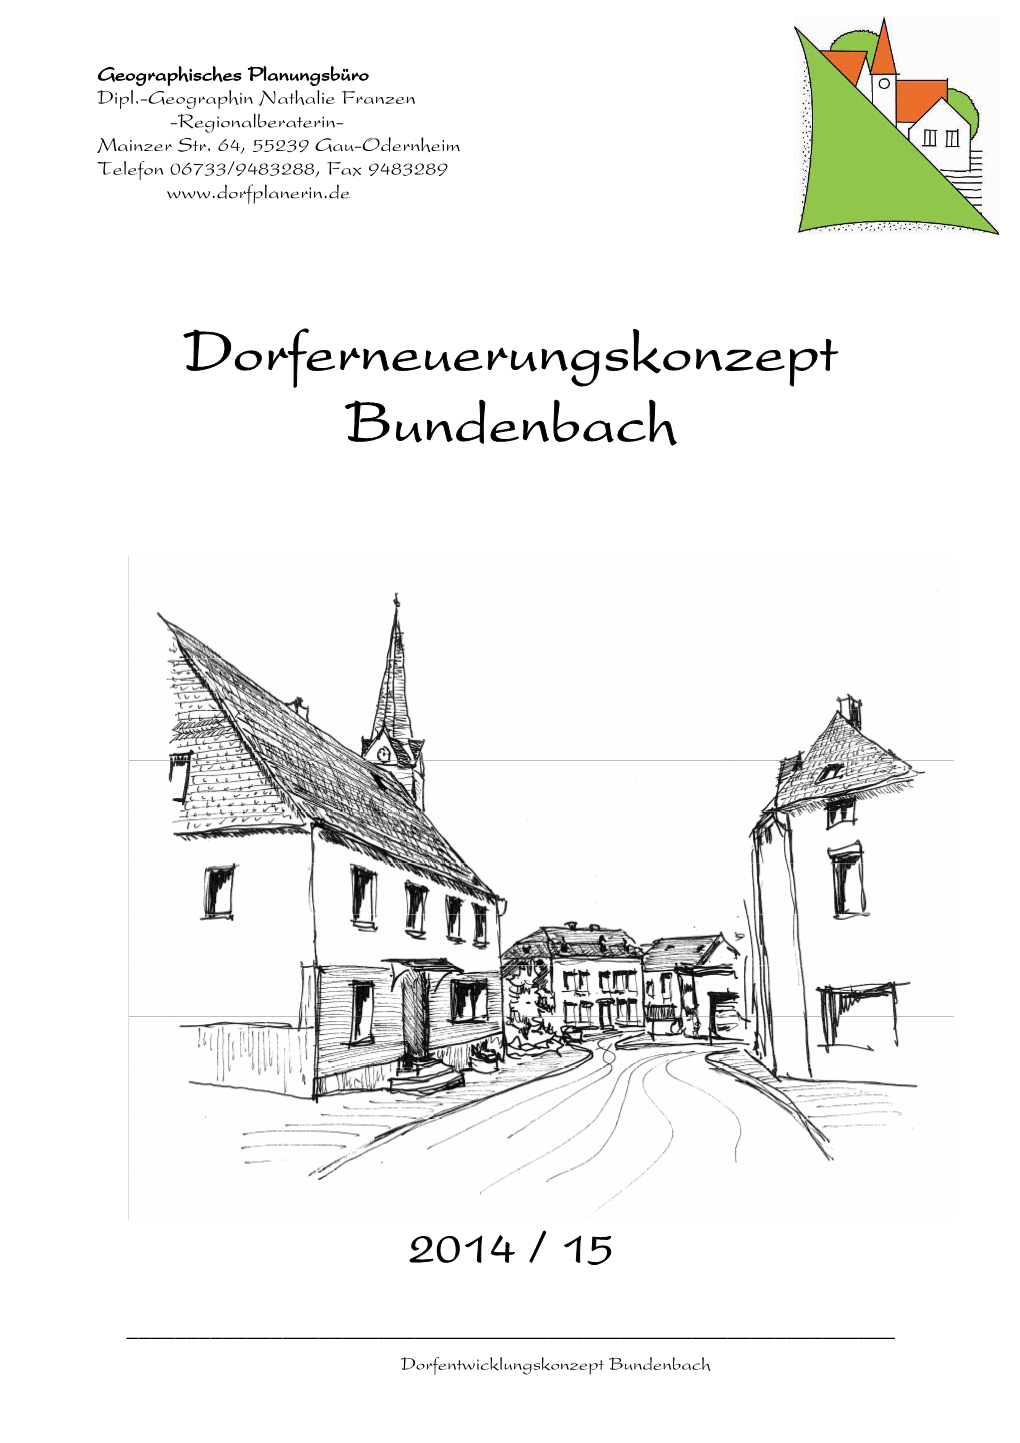 DEK Bundenbach Fertig